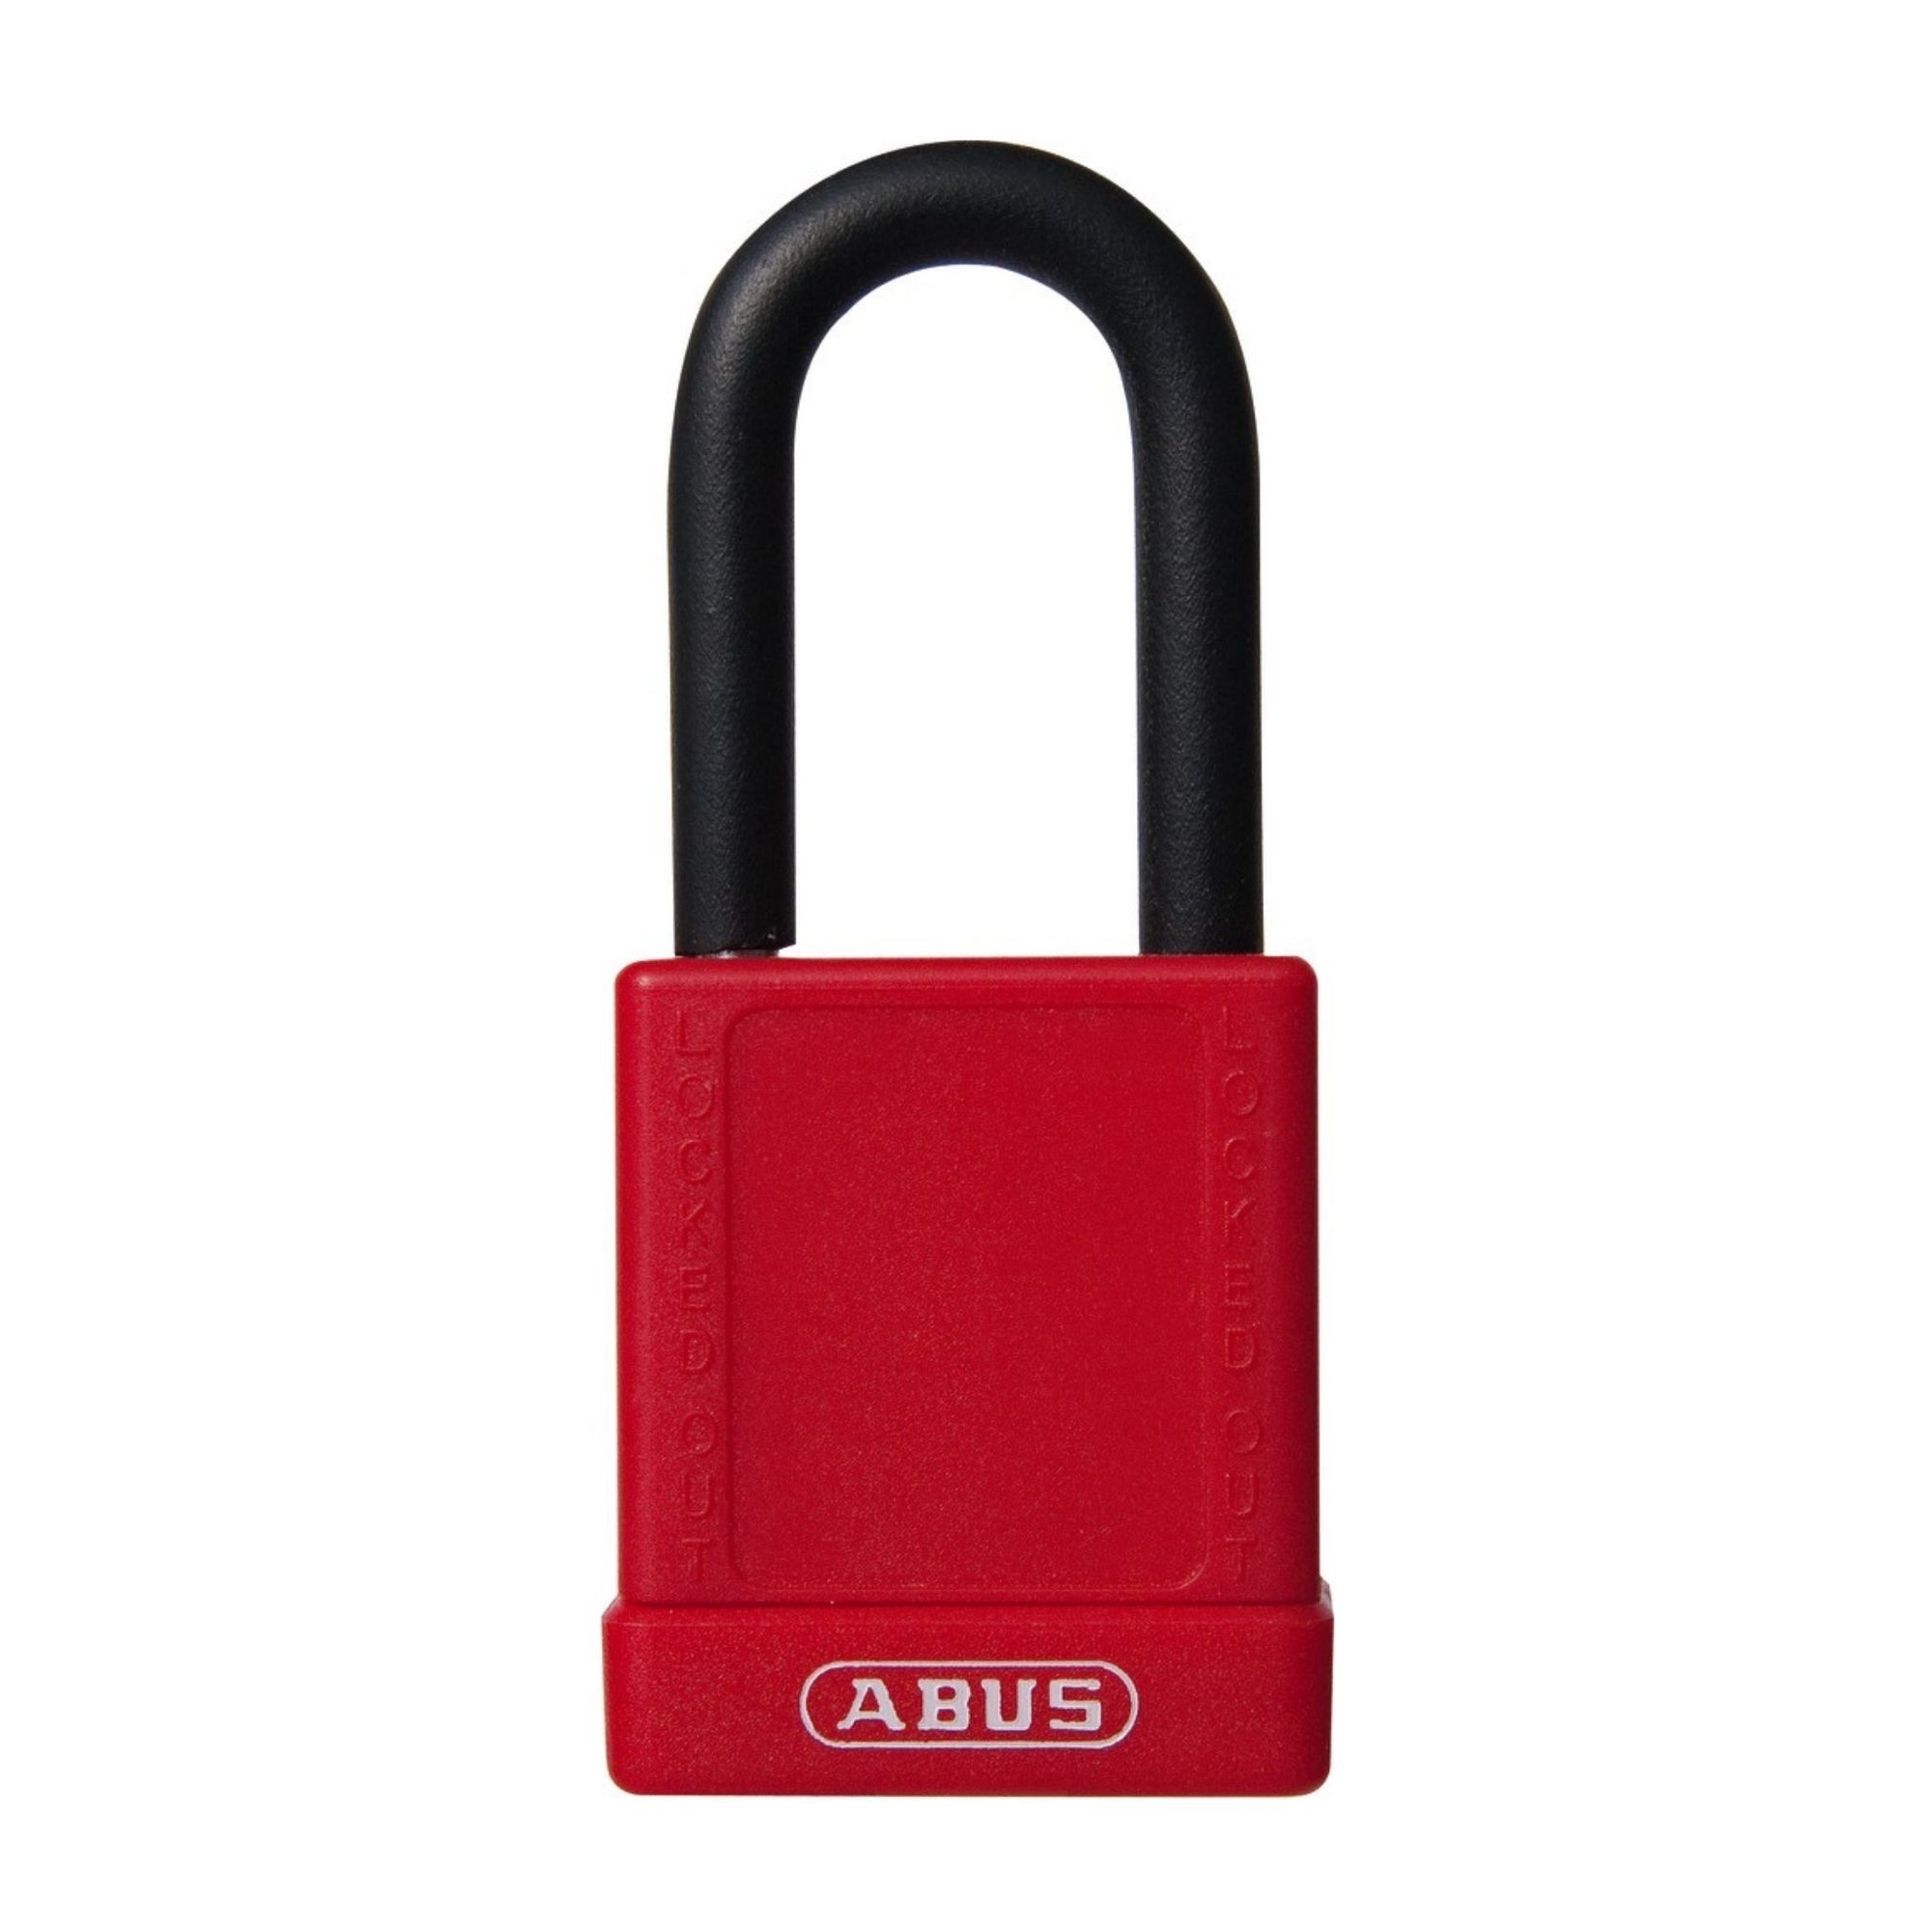 Abus 74/40 Series Red Plastic Covered Aluminum Locks - The Lock Source